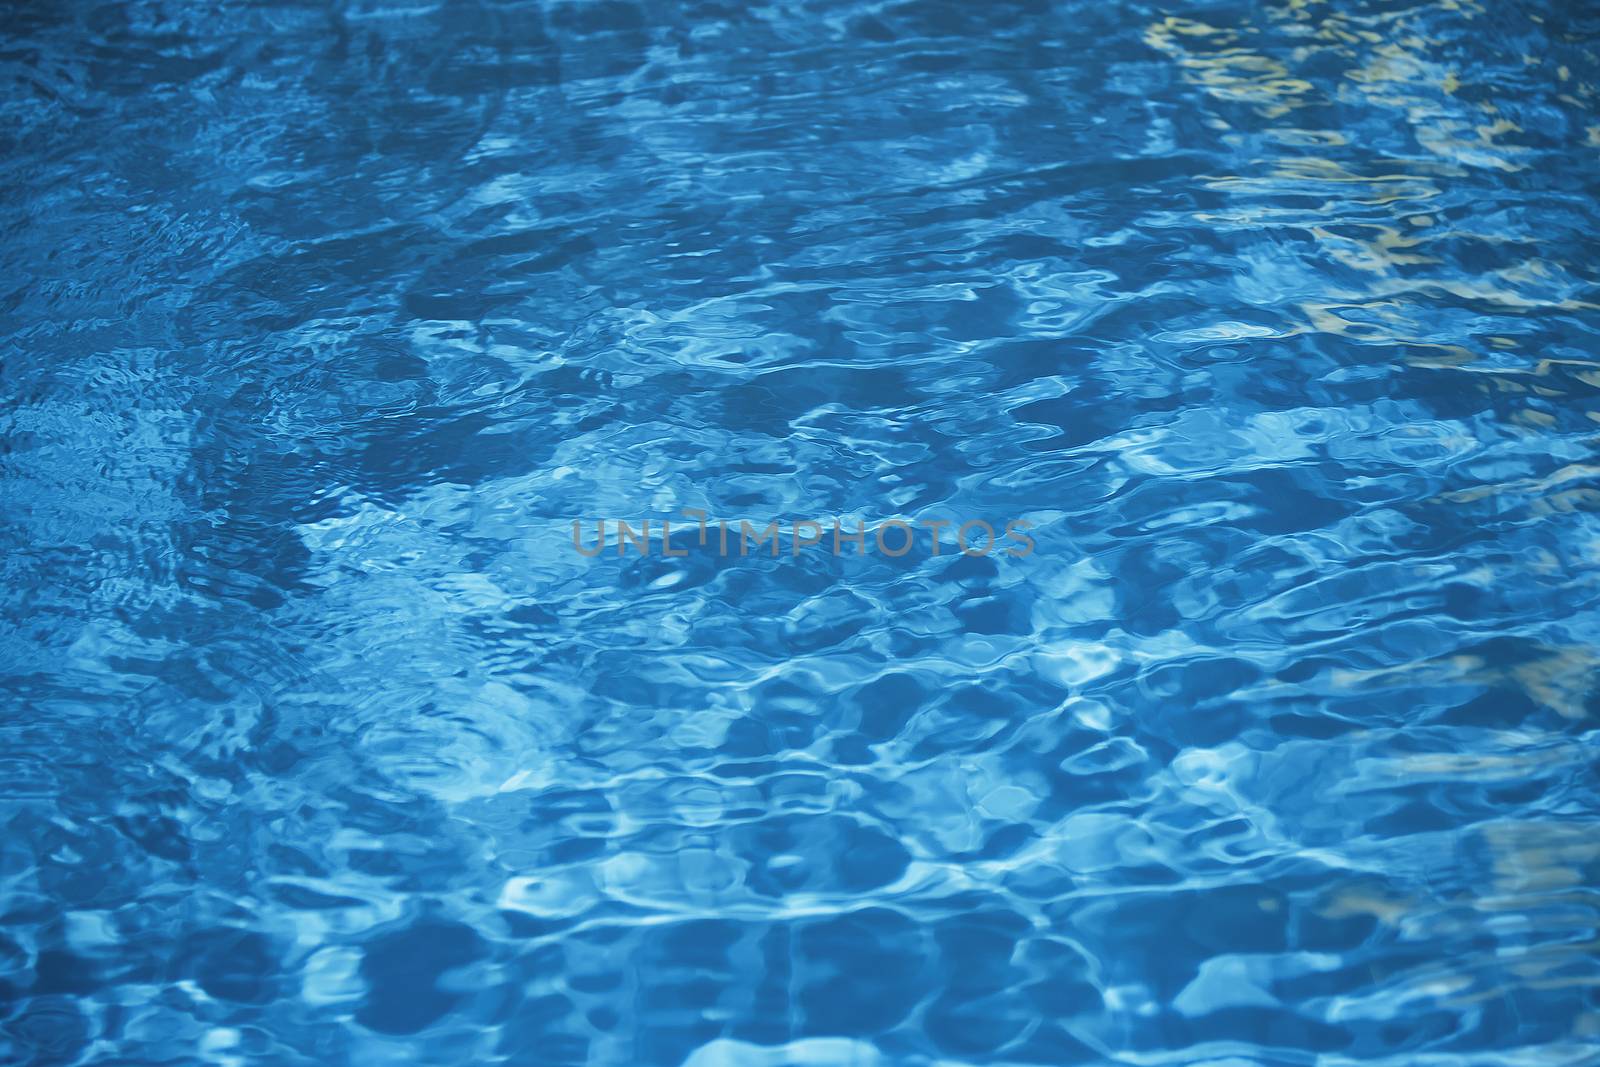 Texture of blue water. Horizontal photo